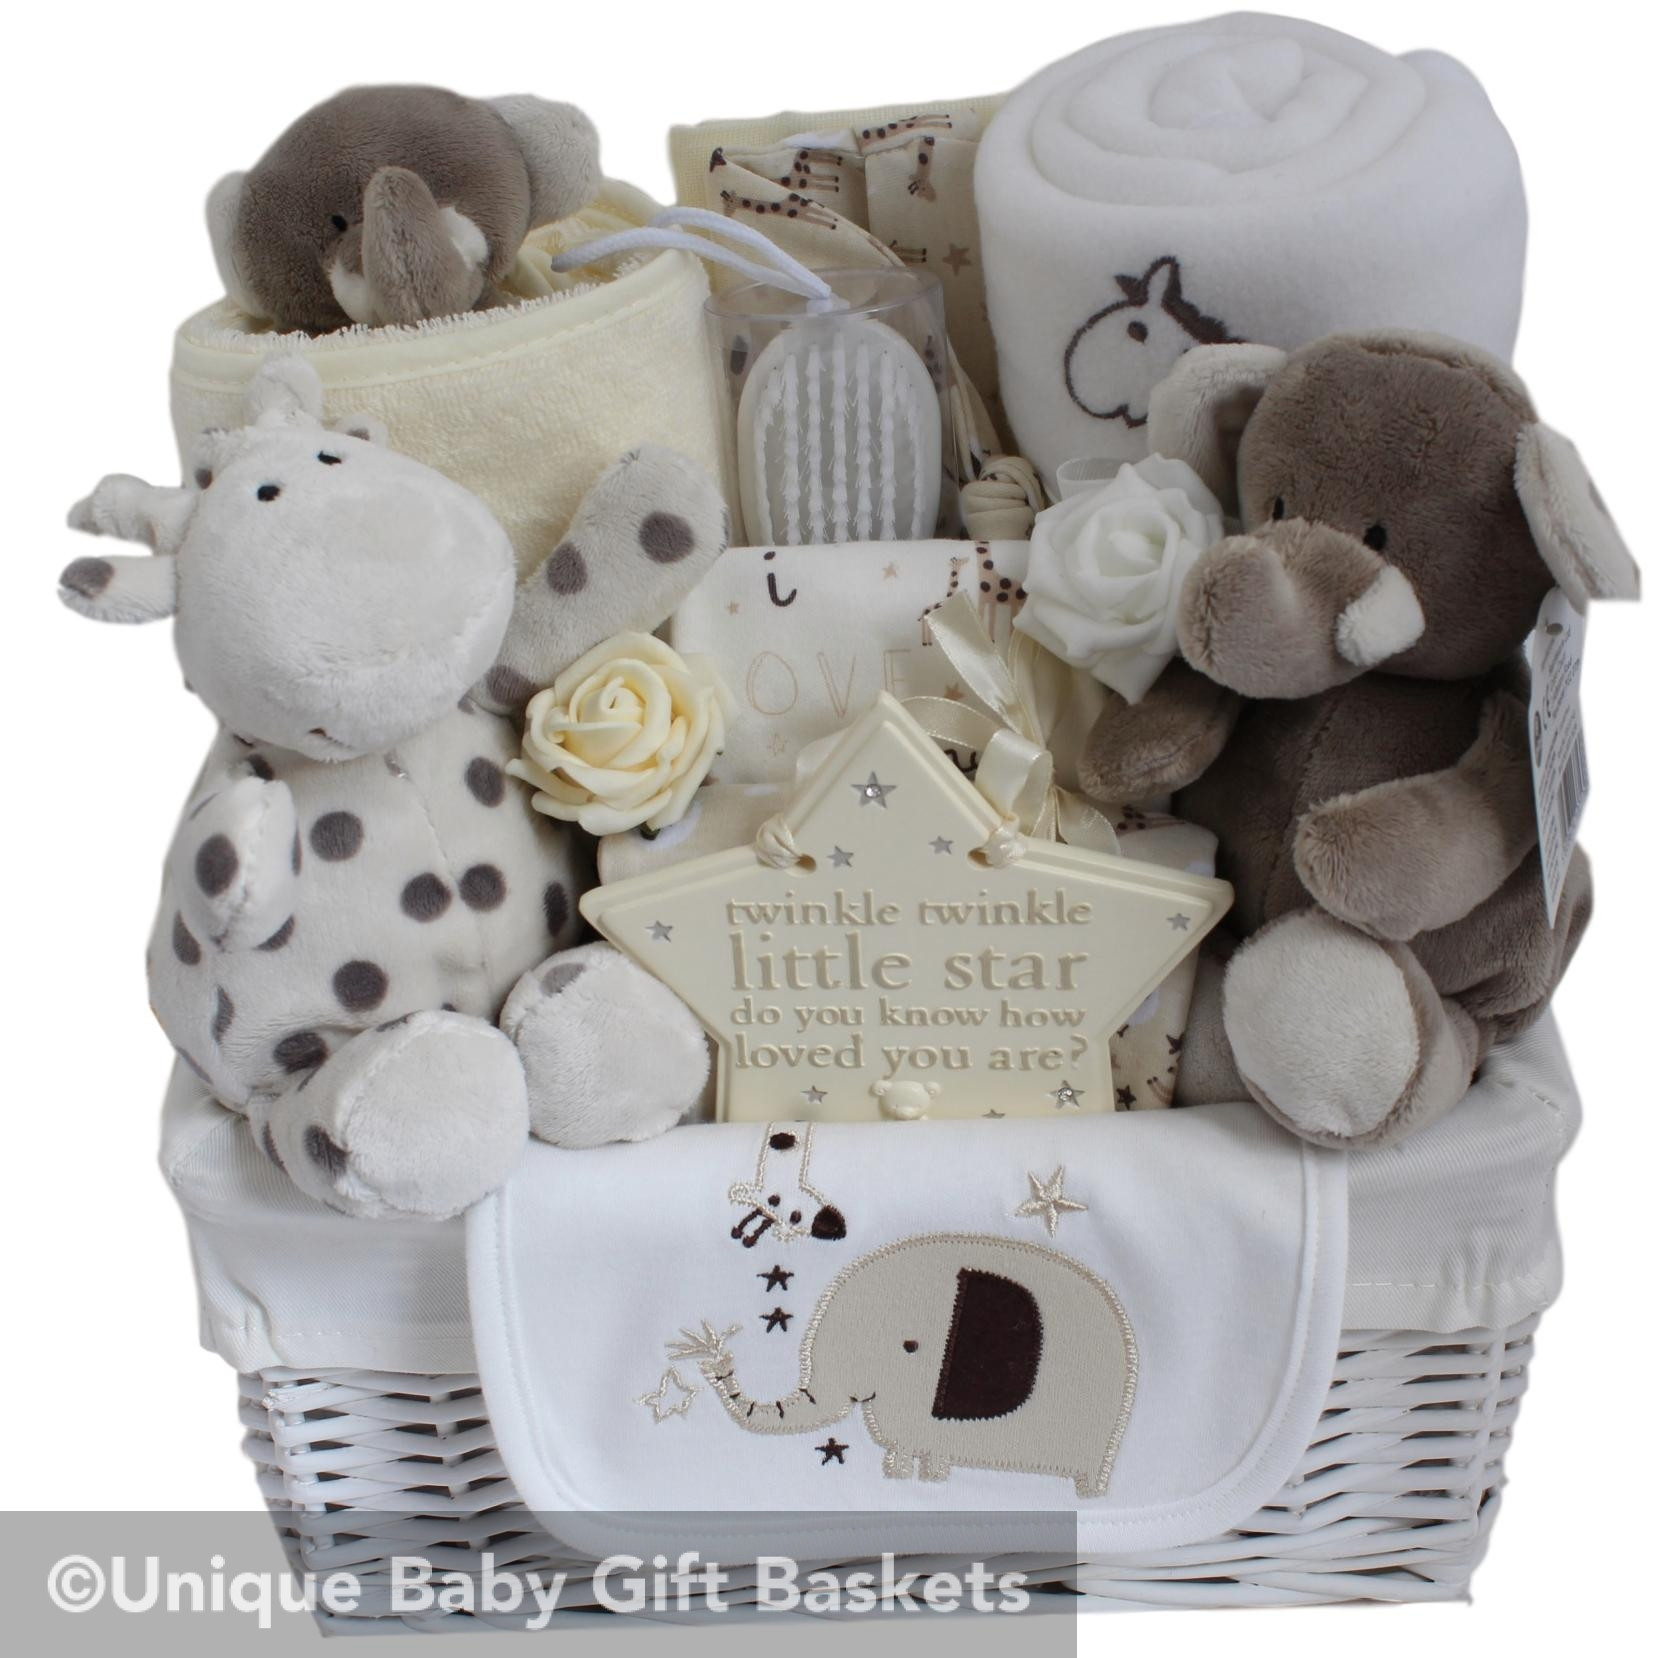 Giraffe Baby Gifts
 Elephant & Giraffe Themed Uni Baby Gift Basket